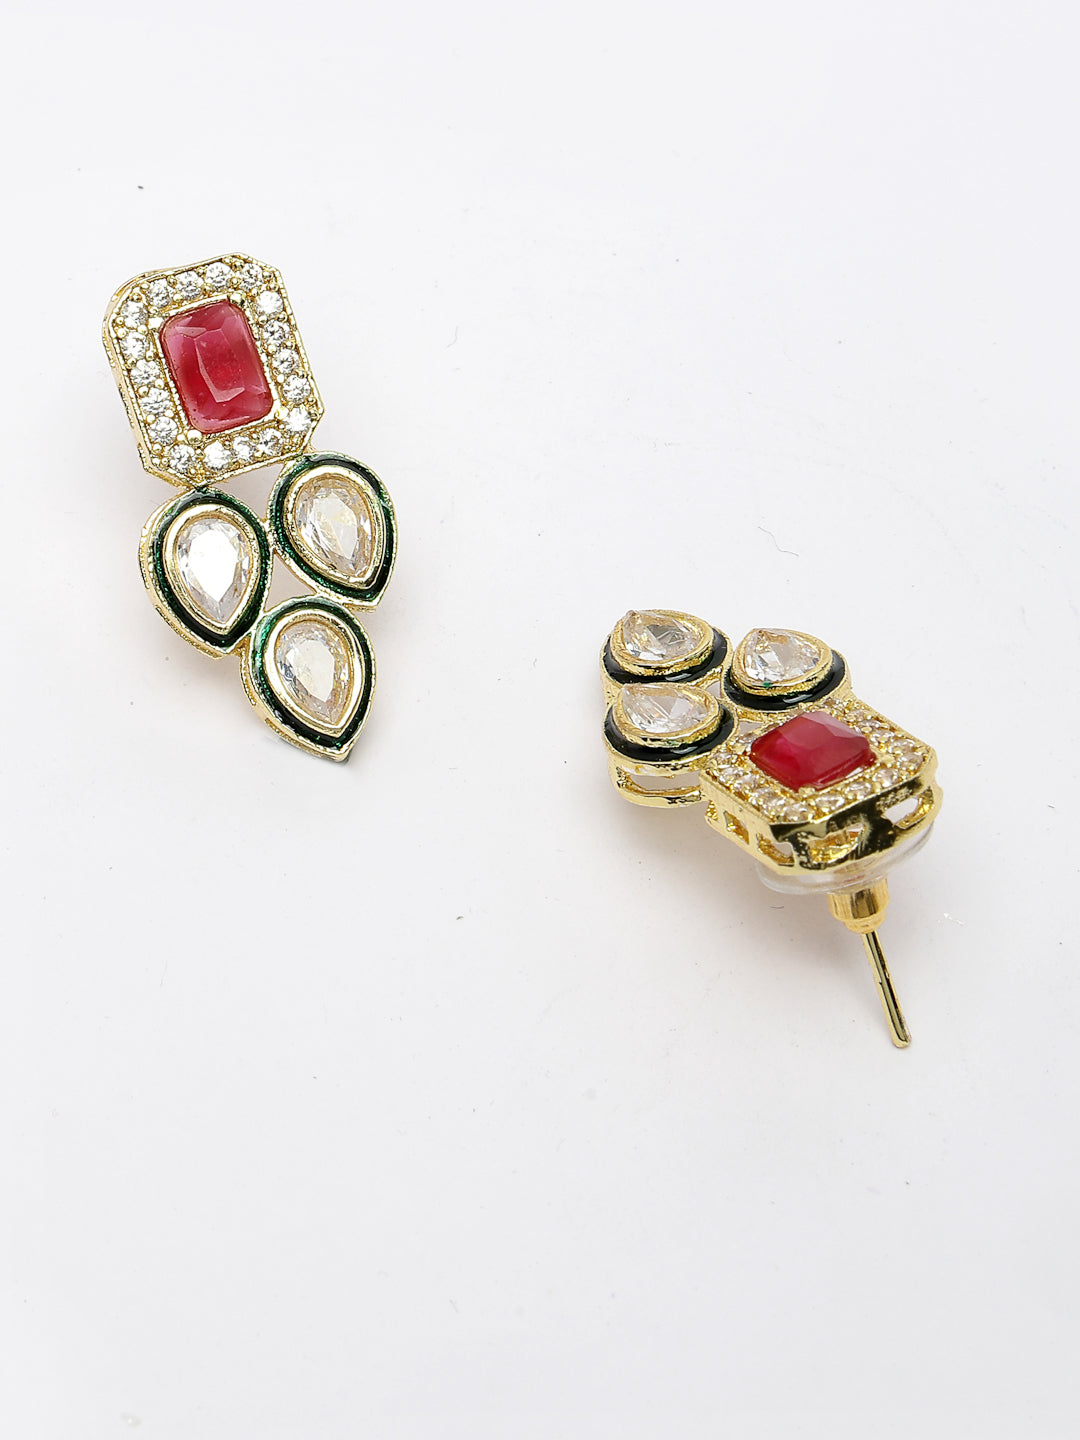 Women's Set Of 2 Red & Gold Kundan Studded Jewellery Set Choker & Long Necklace With Earrings - Nvr